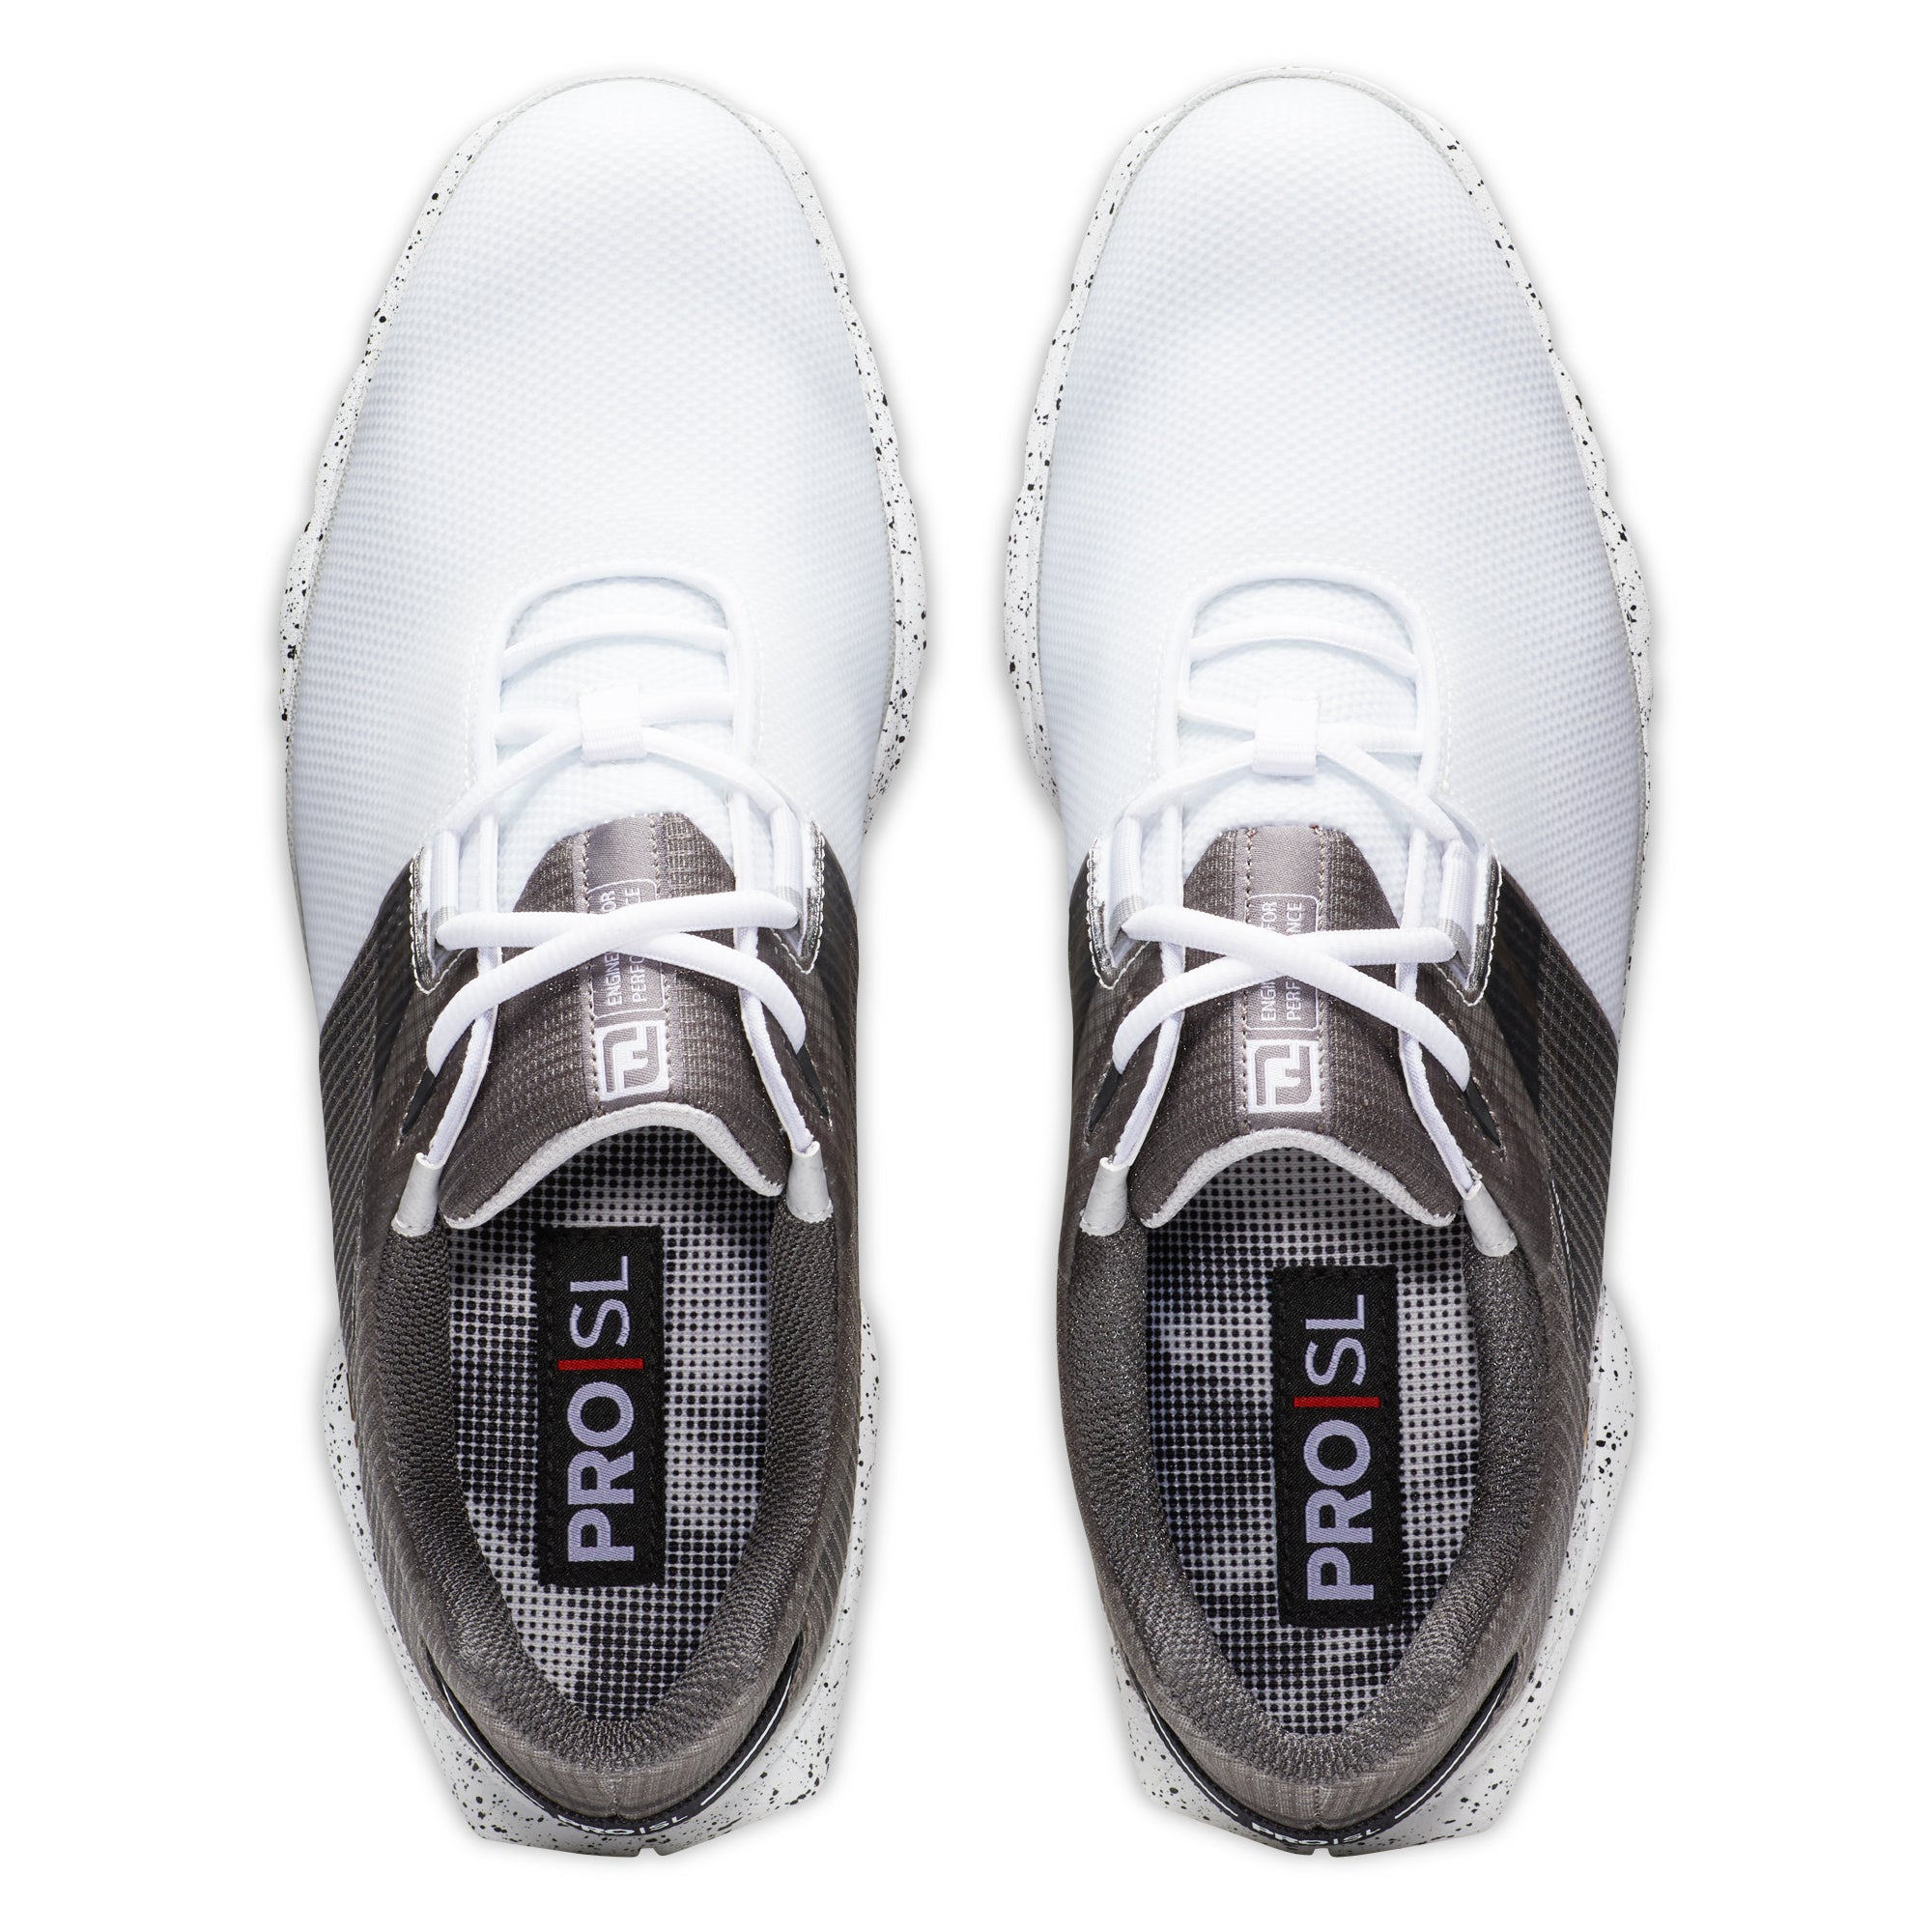 footjoy-pro-sl-sport-golf-shoes-53863-white-multi-black